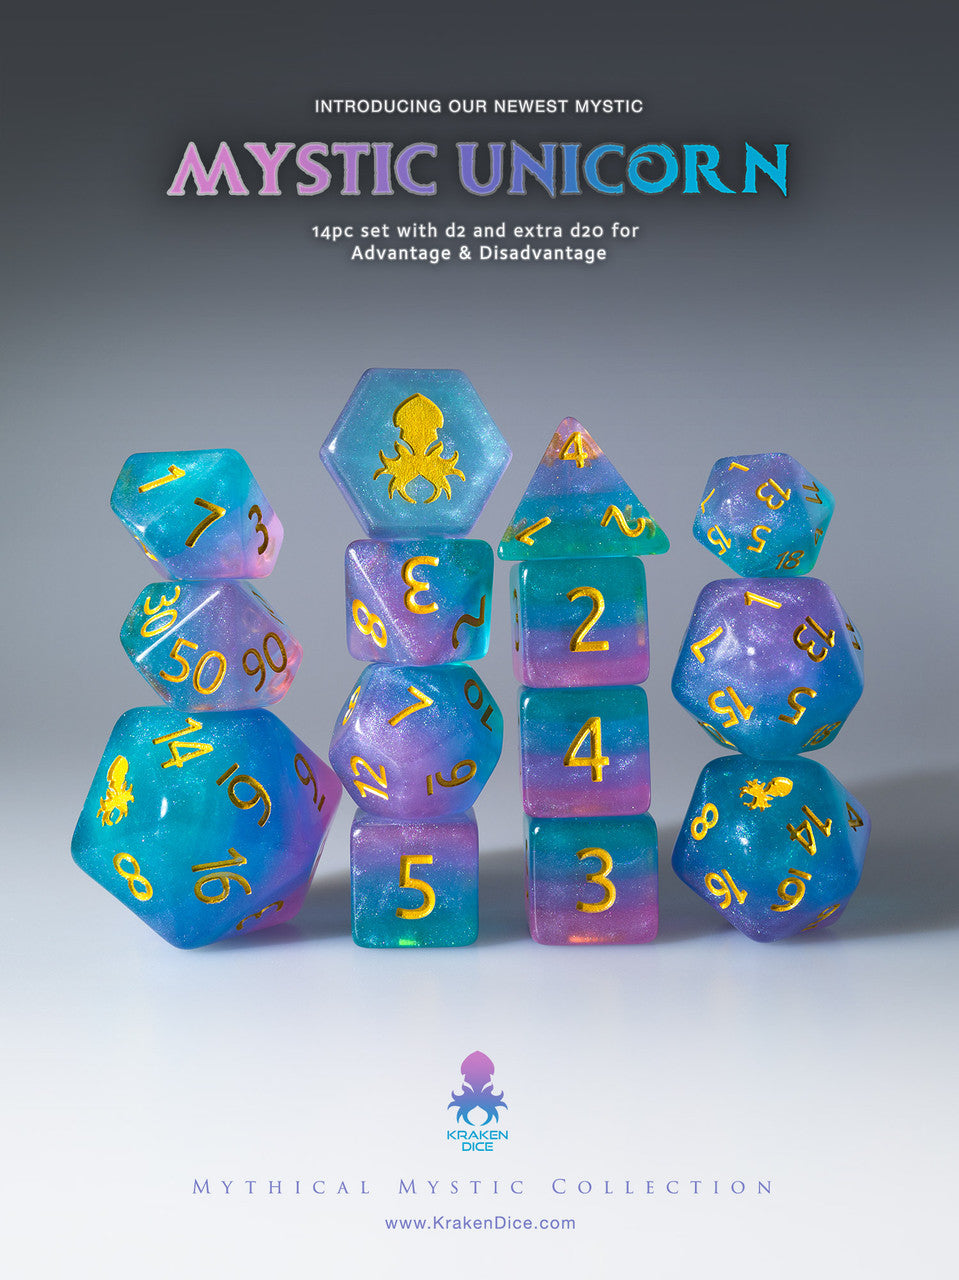 Mystic Unicorn Set